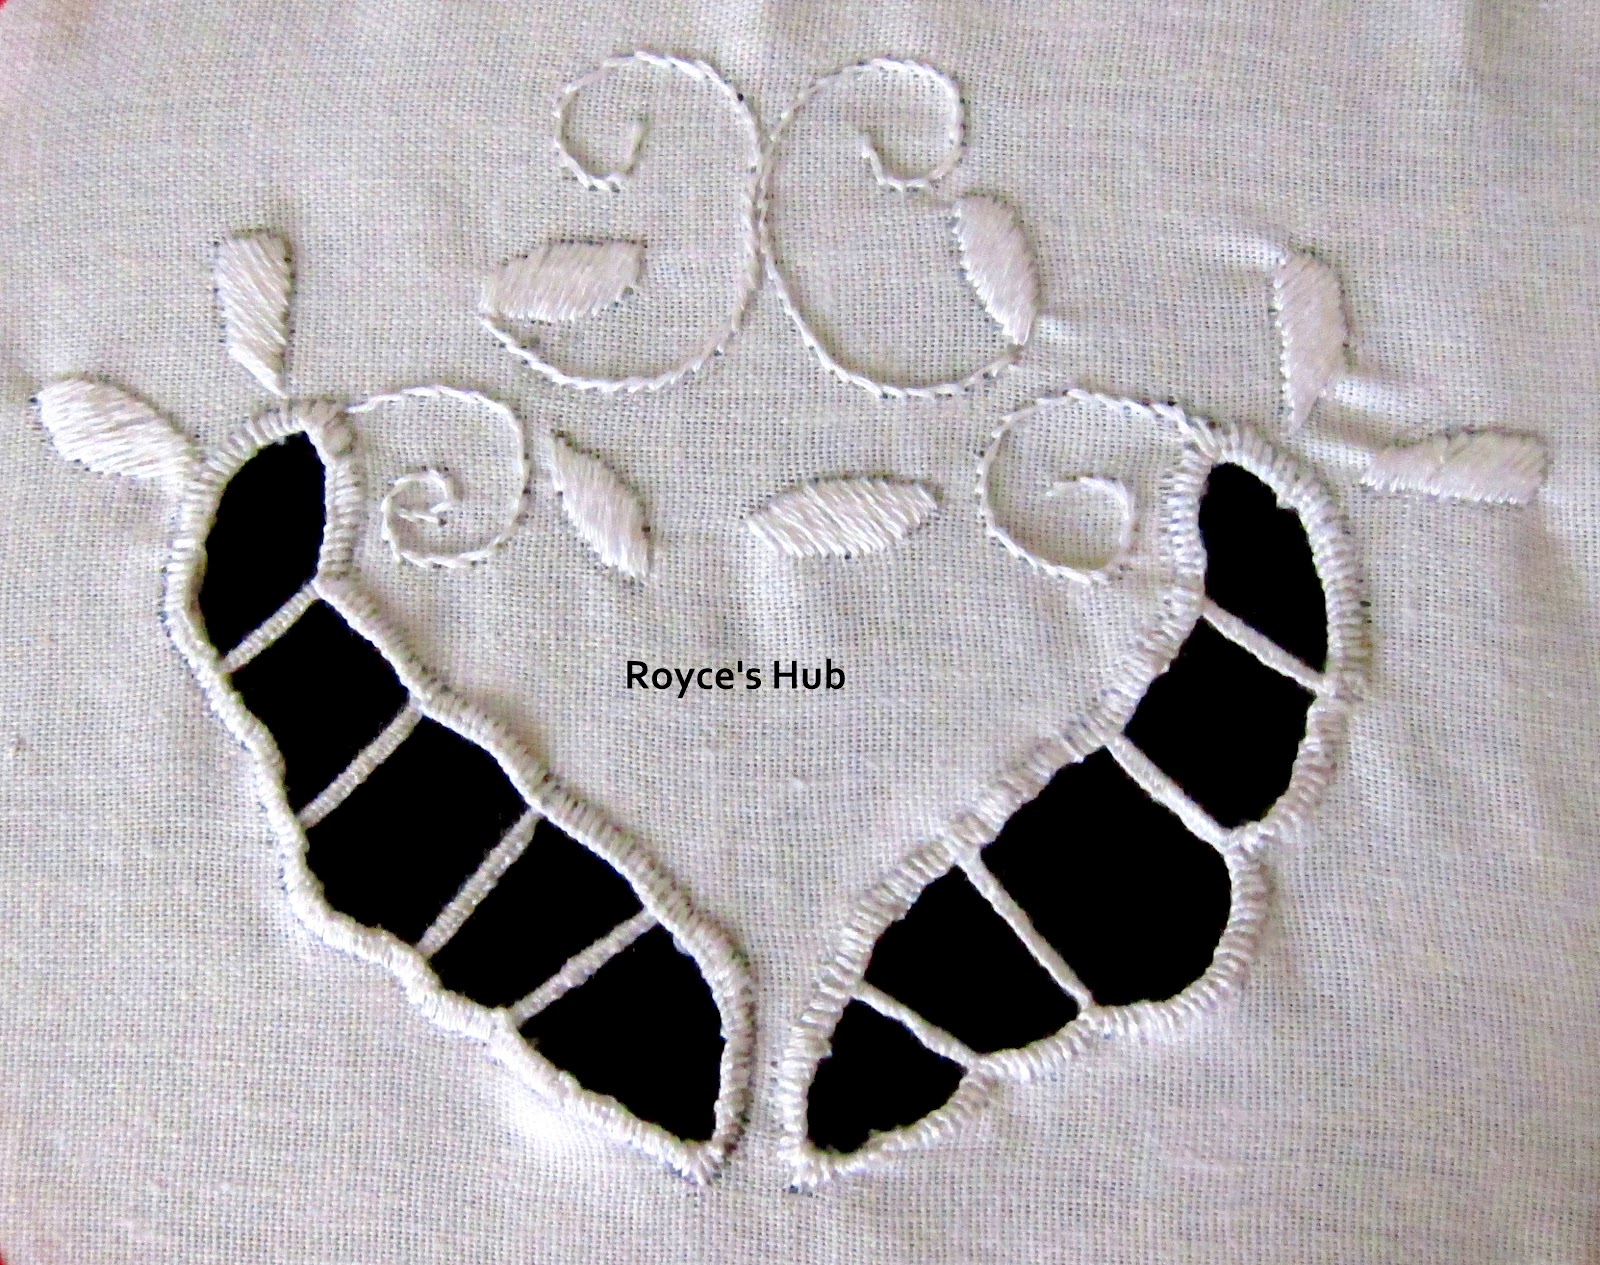 Cutwork Embroidery Patterns Royces Hub Cutwork Embroidery